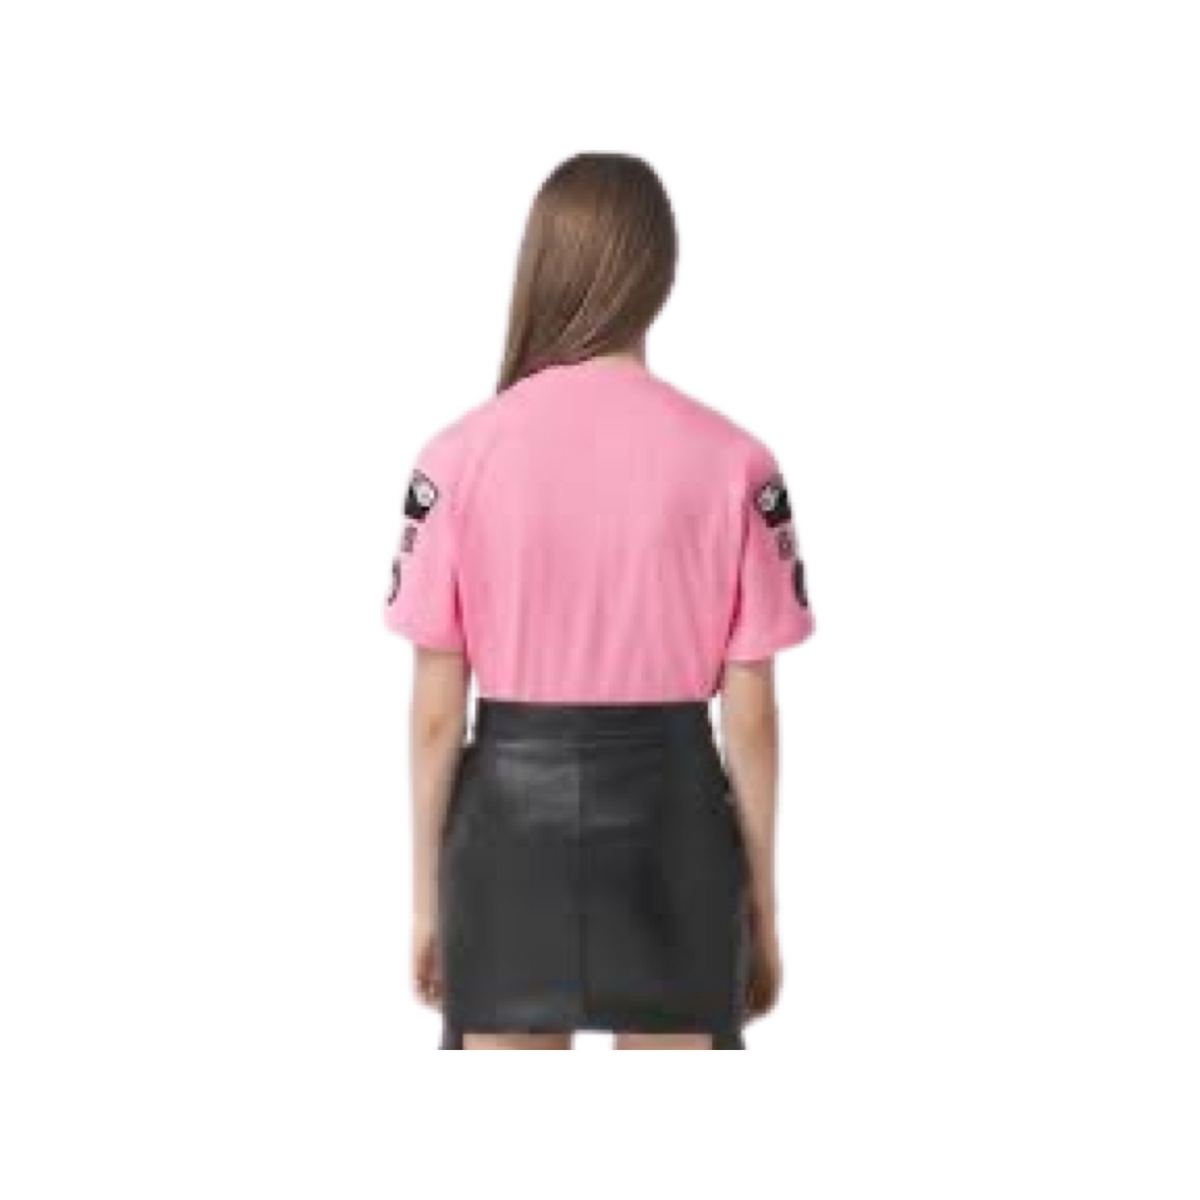 burberry-applique-oversize-t-shirt-1